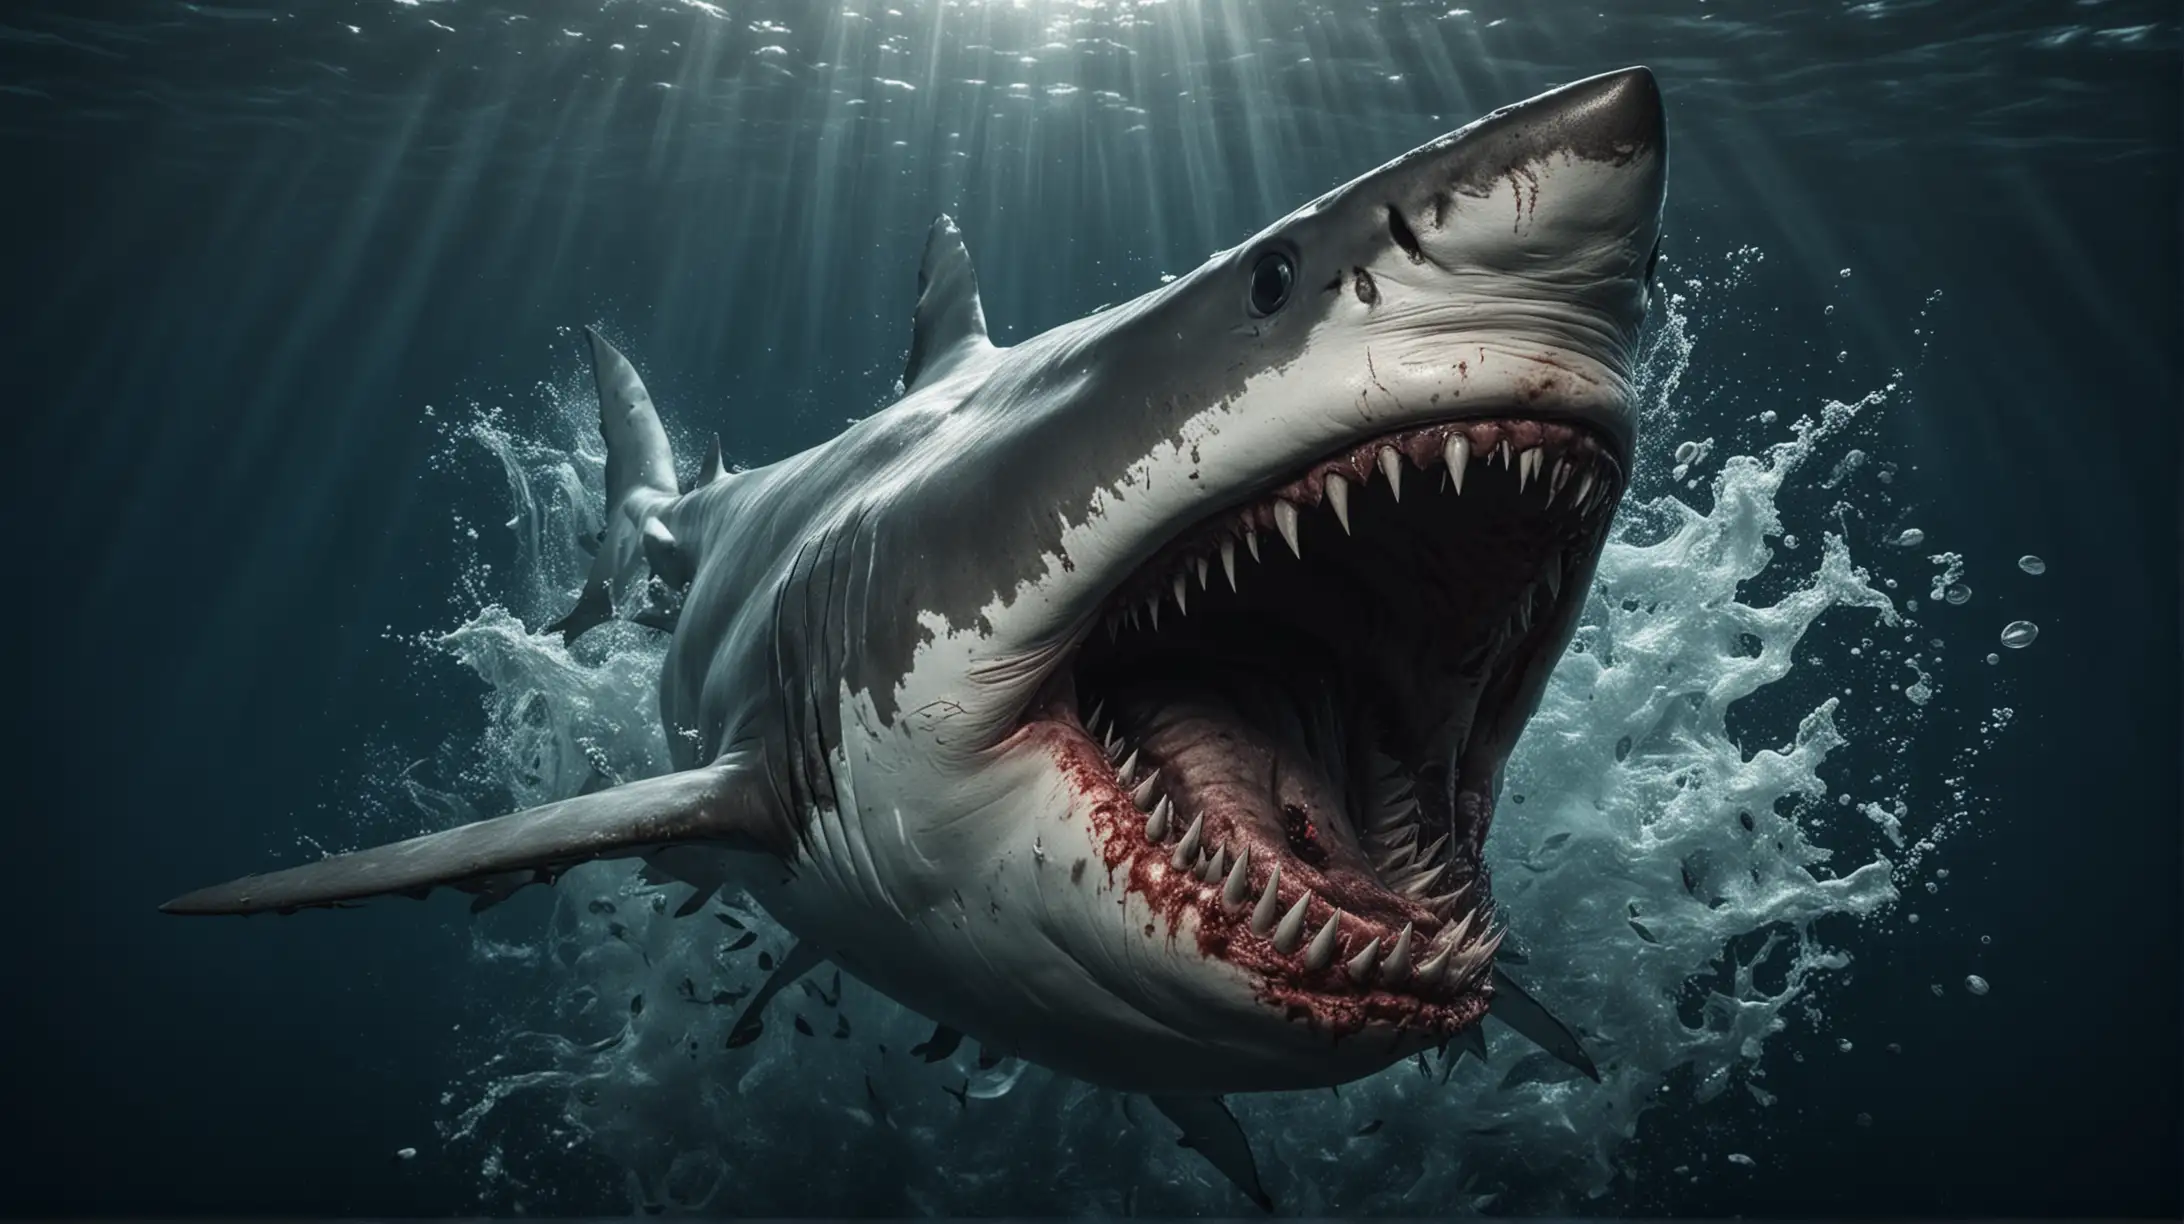 Menacing Great White Shark with RazorSharp Teeth in Deep Blue Ocean